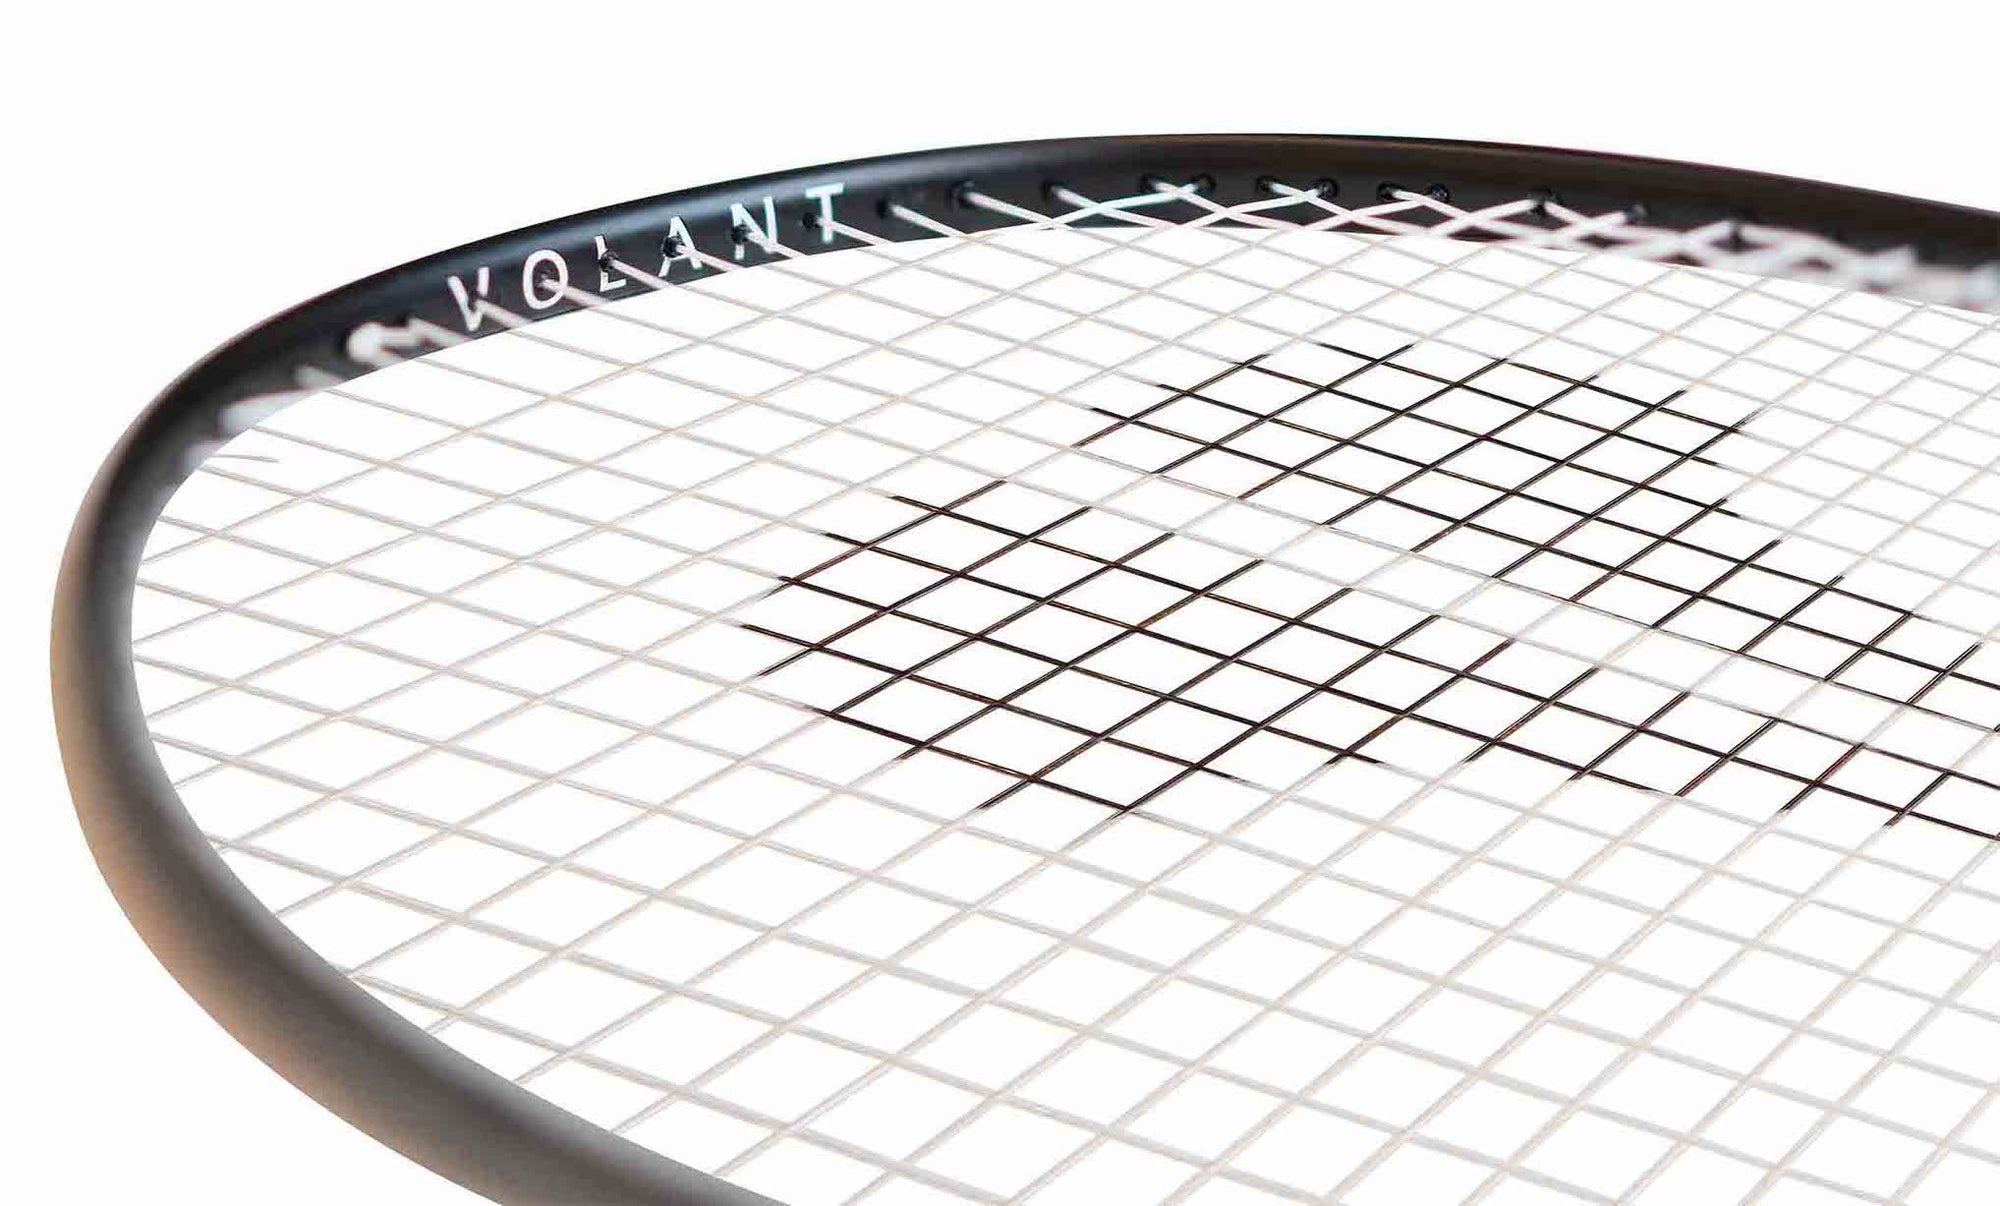 Beginner Badminton Racket Volant Badminton Cheap High Quality